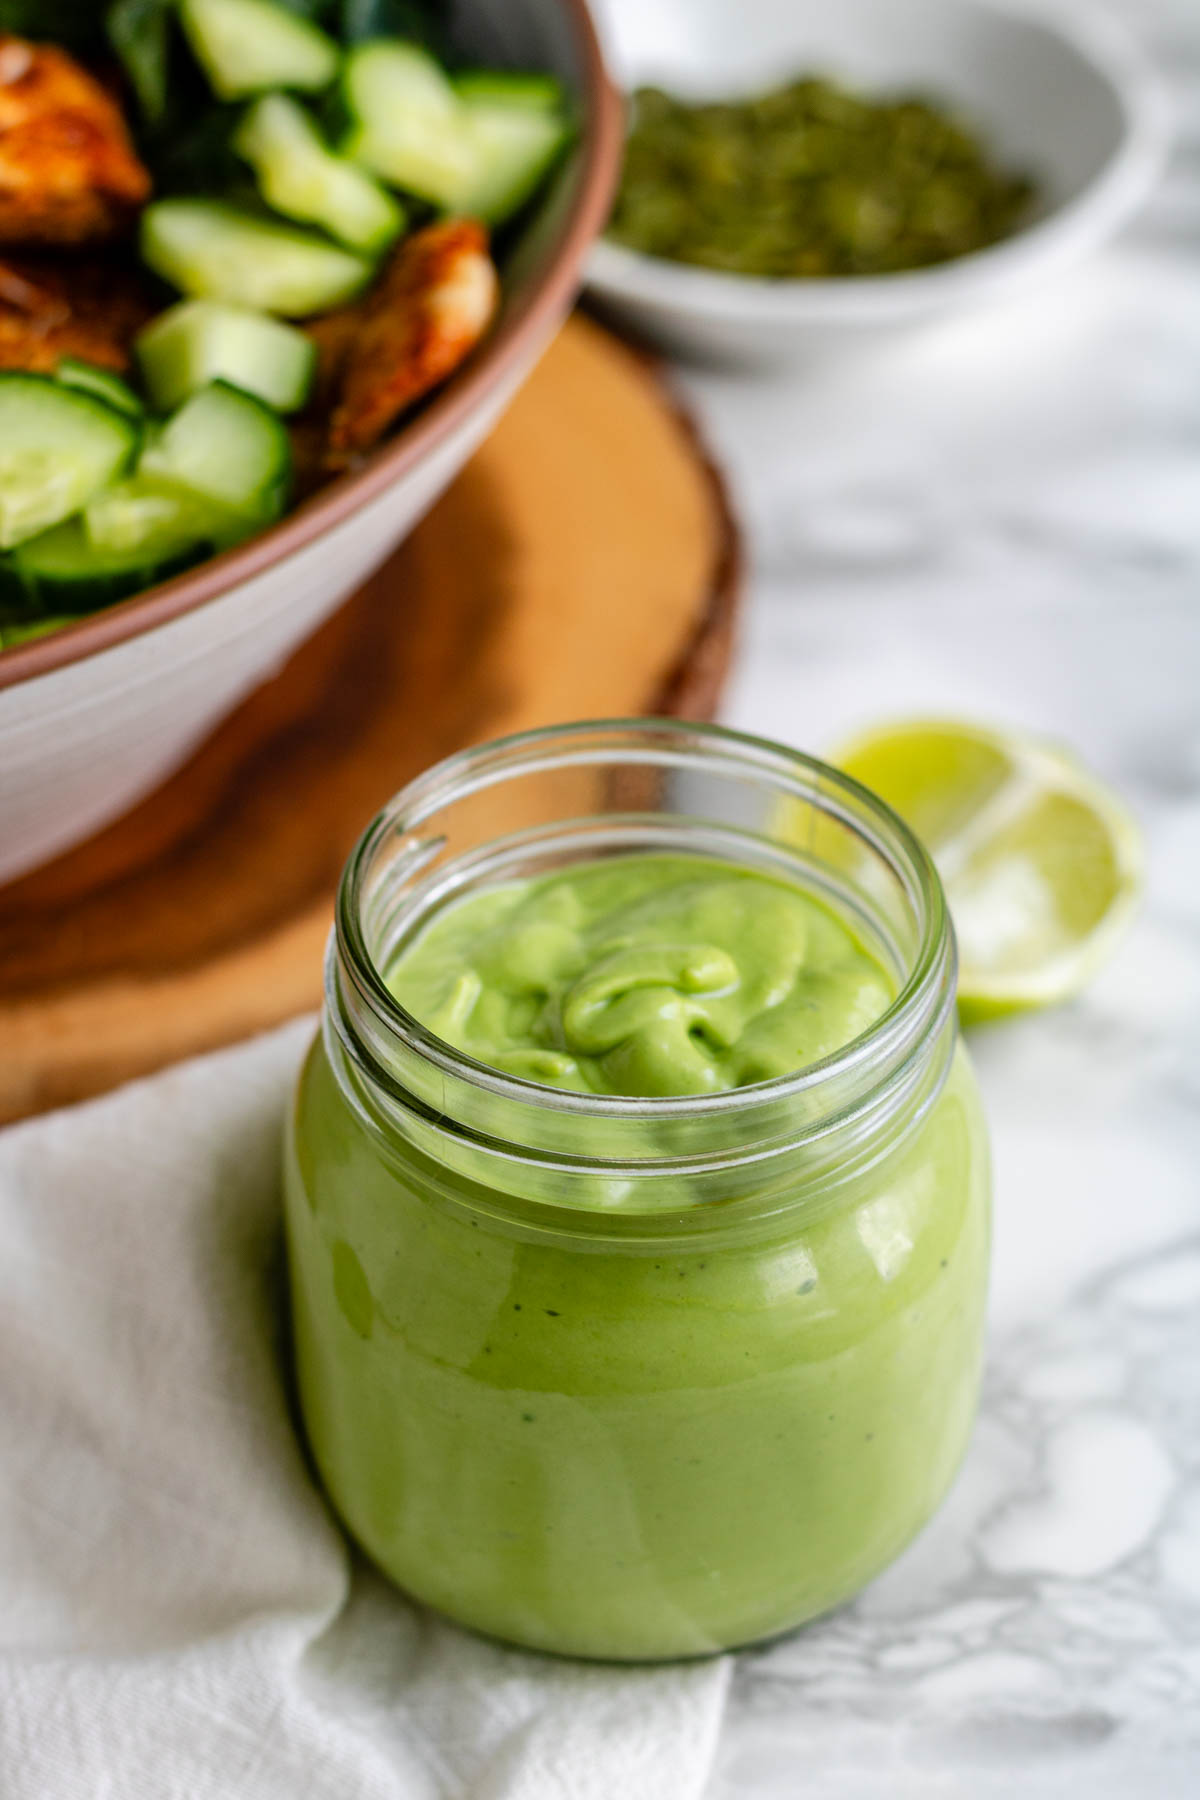 Green salad dressing in a jar.